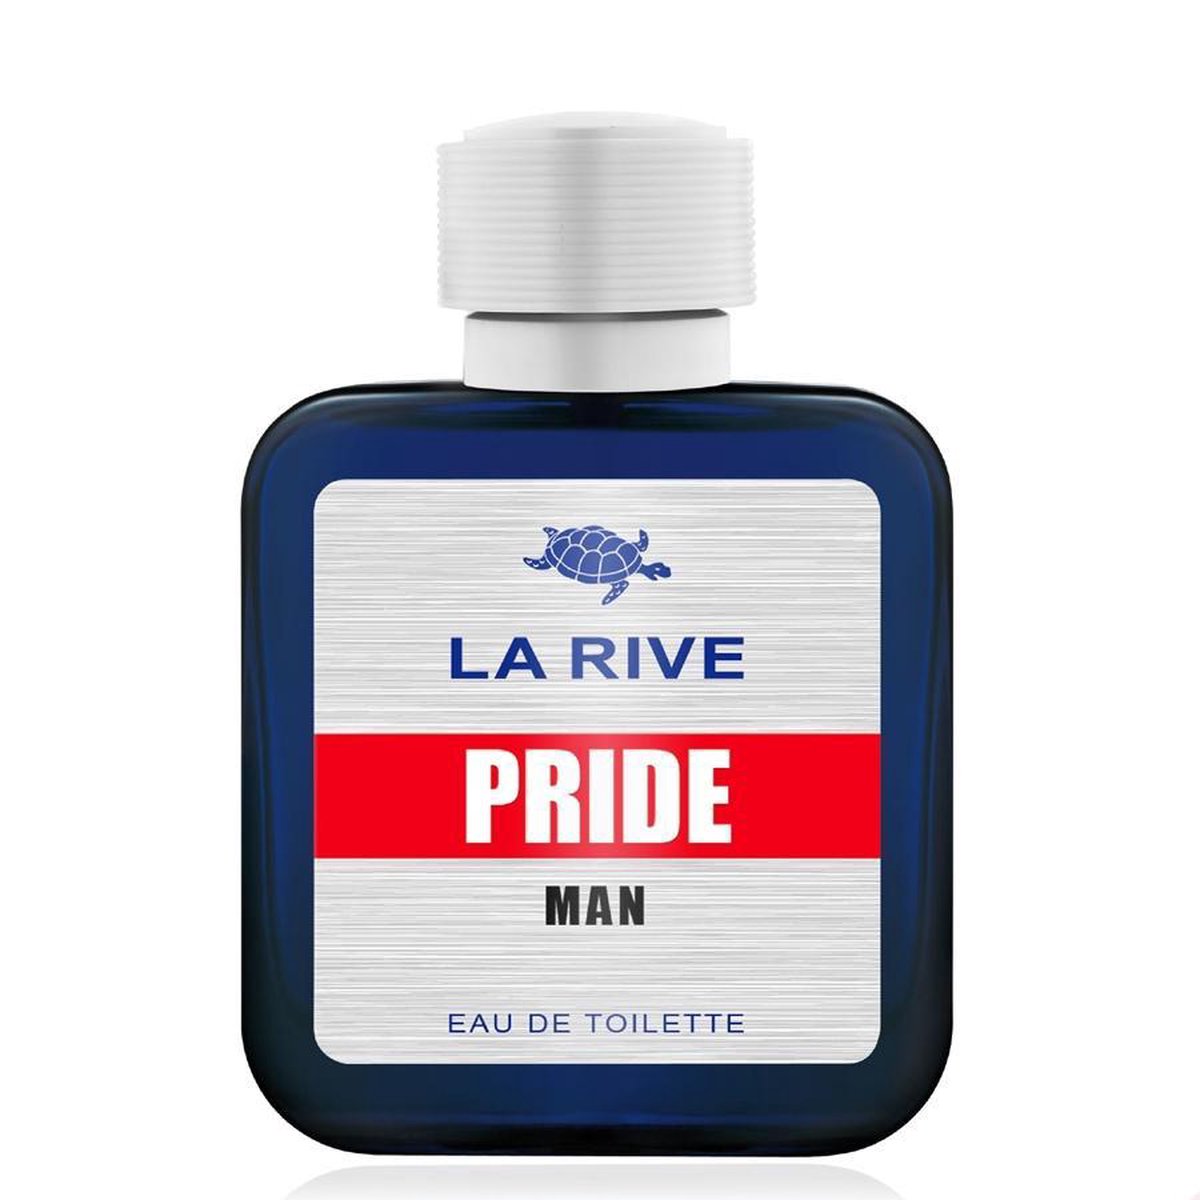 La Rive Pride man 90 ml - Eau de Toilette